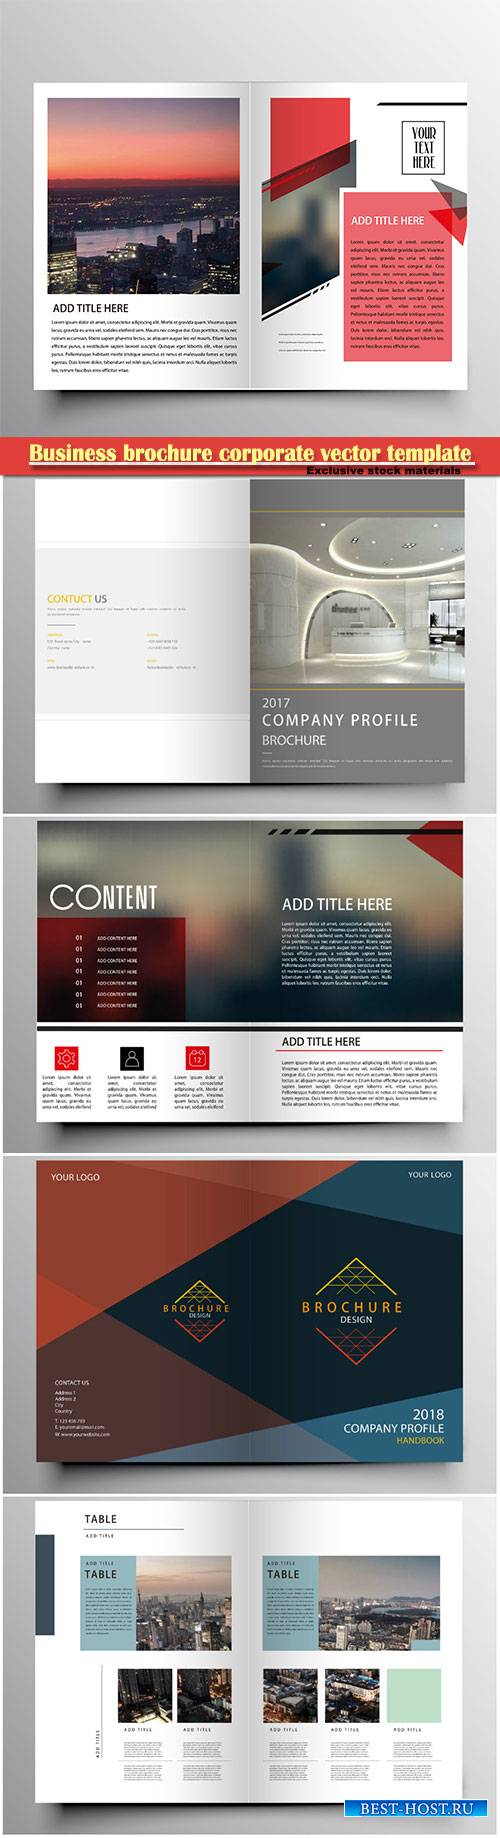 Business brochure corporate vector template, magazine flyer mockup # 52